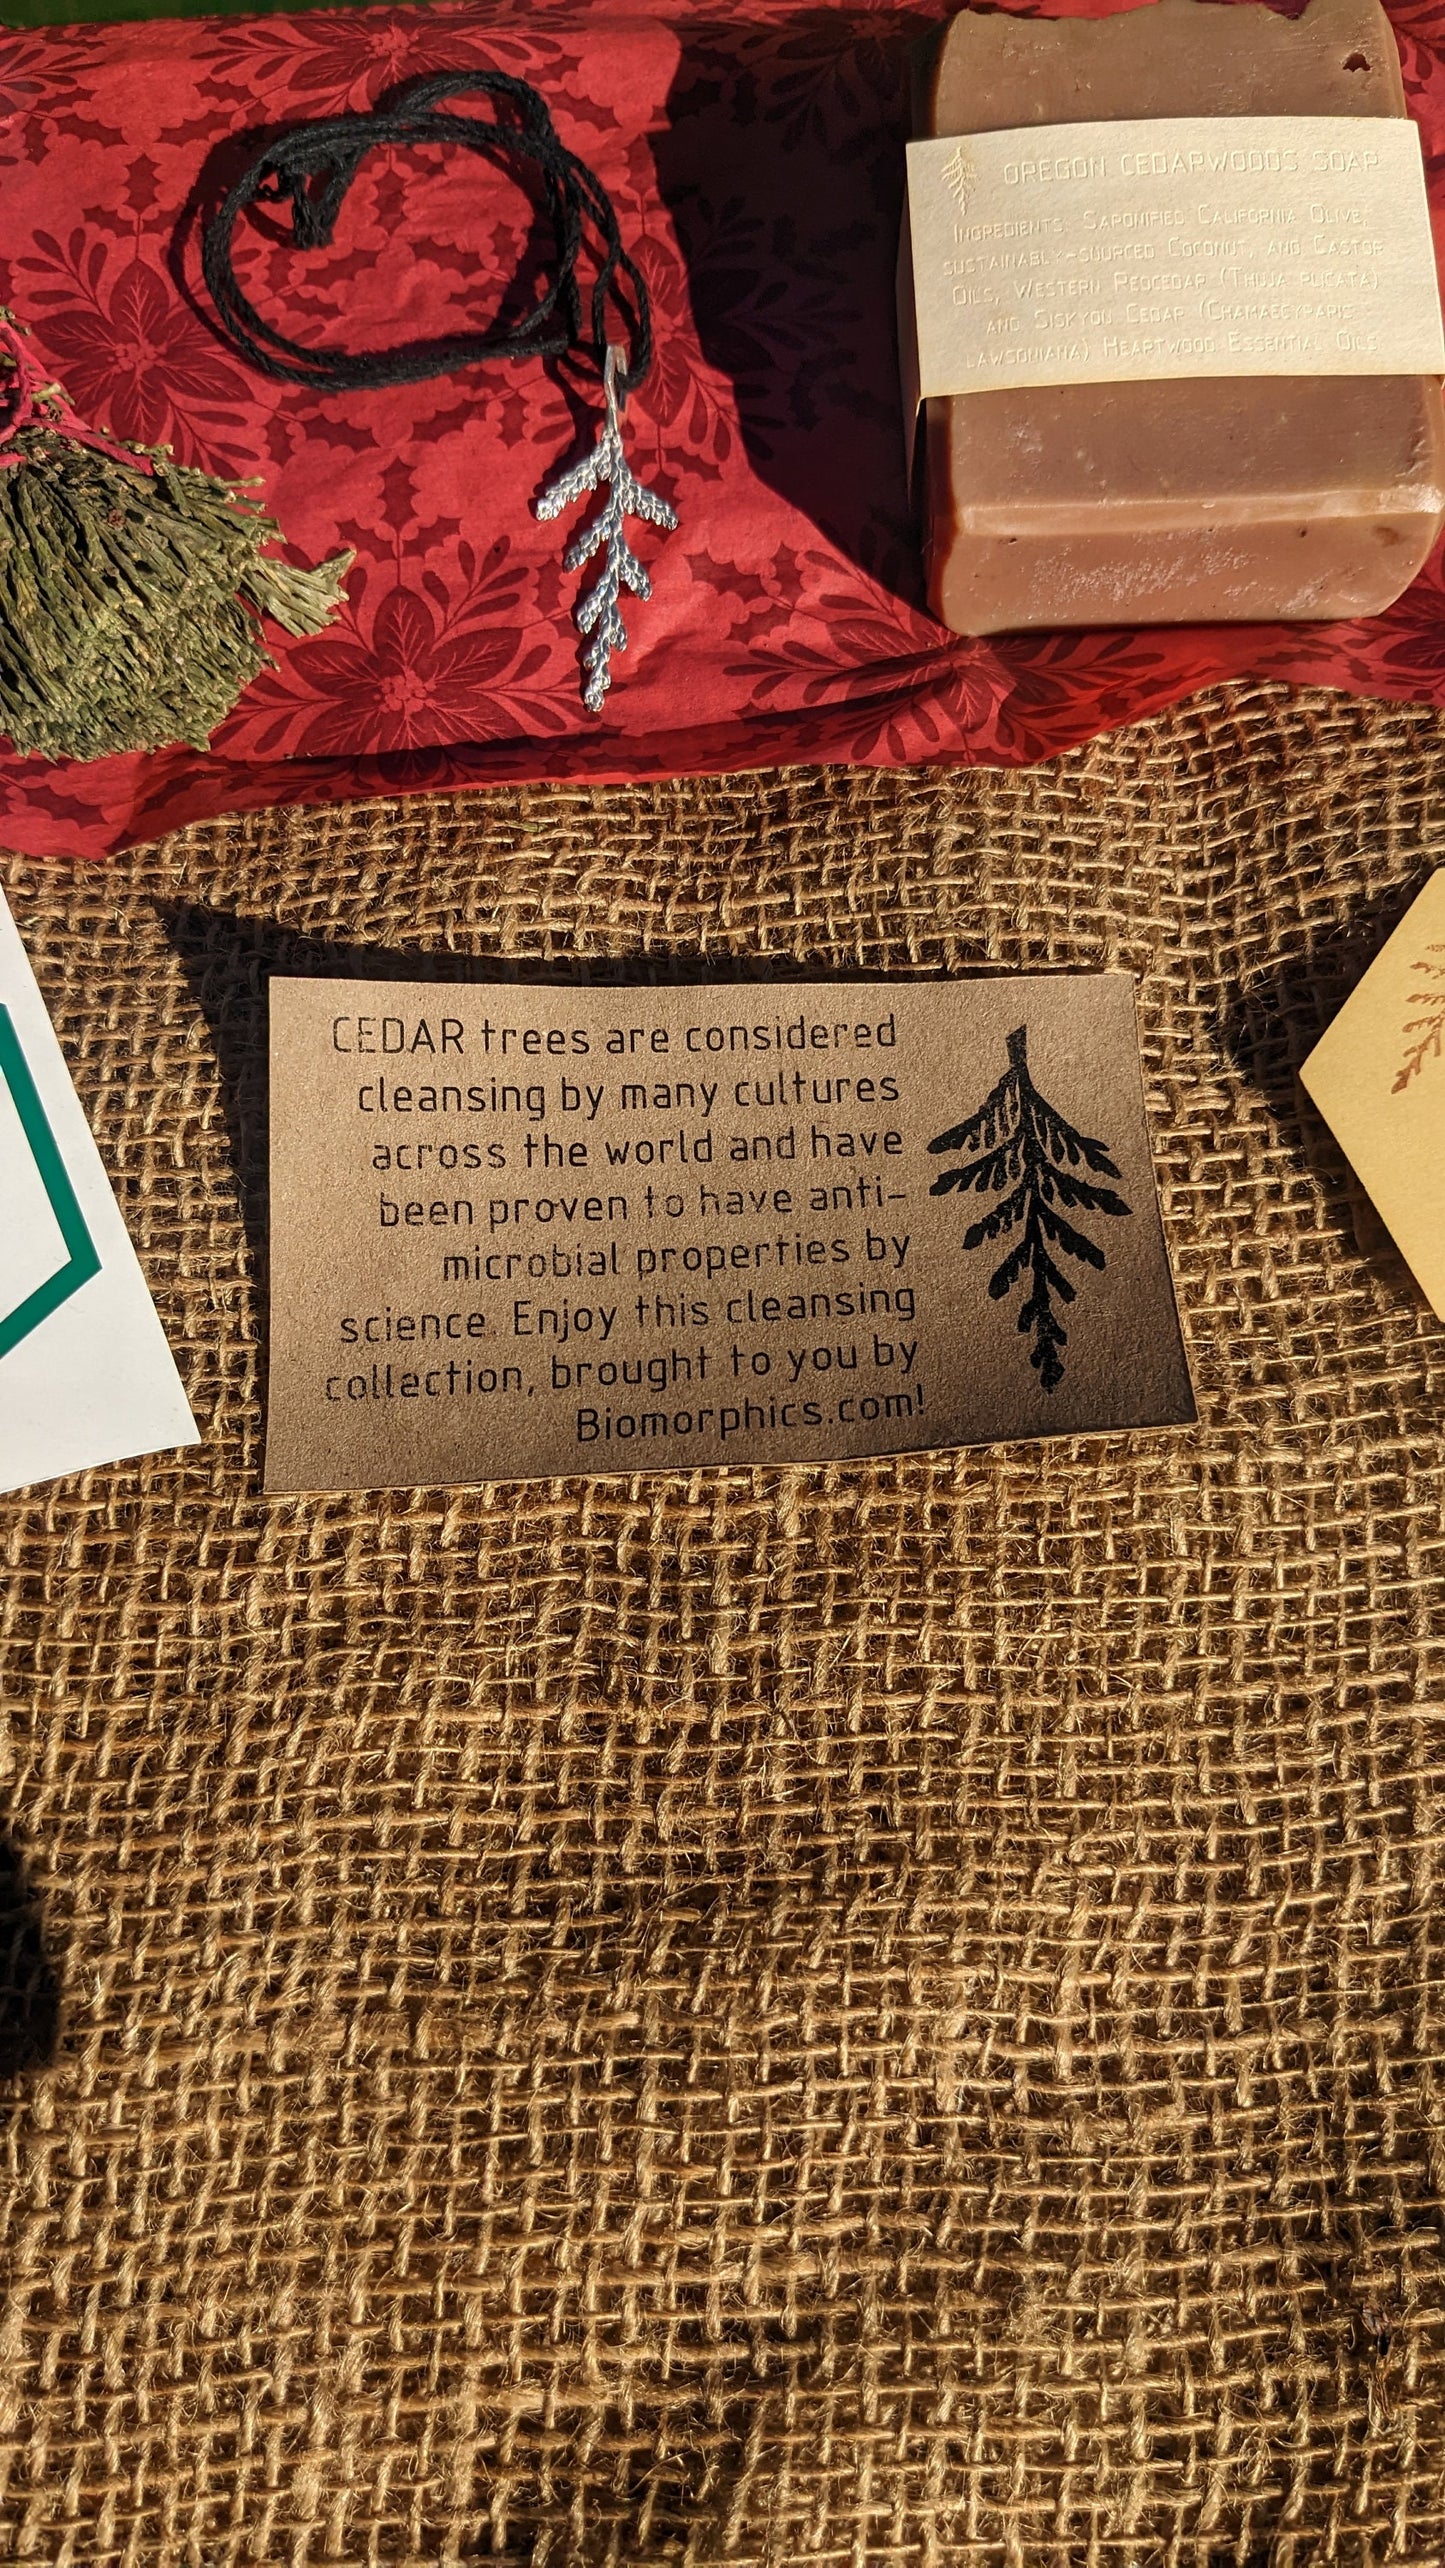 Cedar Gift Box - Includes Cast Cedar Leaf Pendant, Oregon Cedarwoods Soap, Cedar Smoke Cleansing Wand, and Cedar Leaf Hexagon Decal